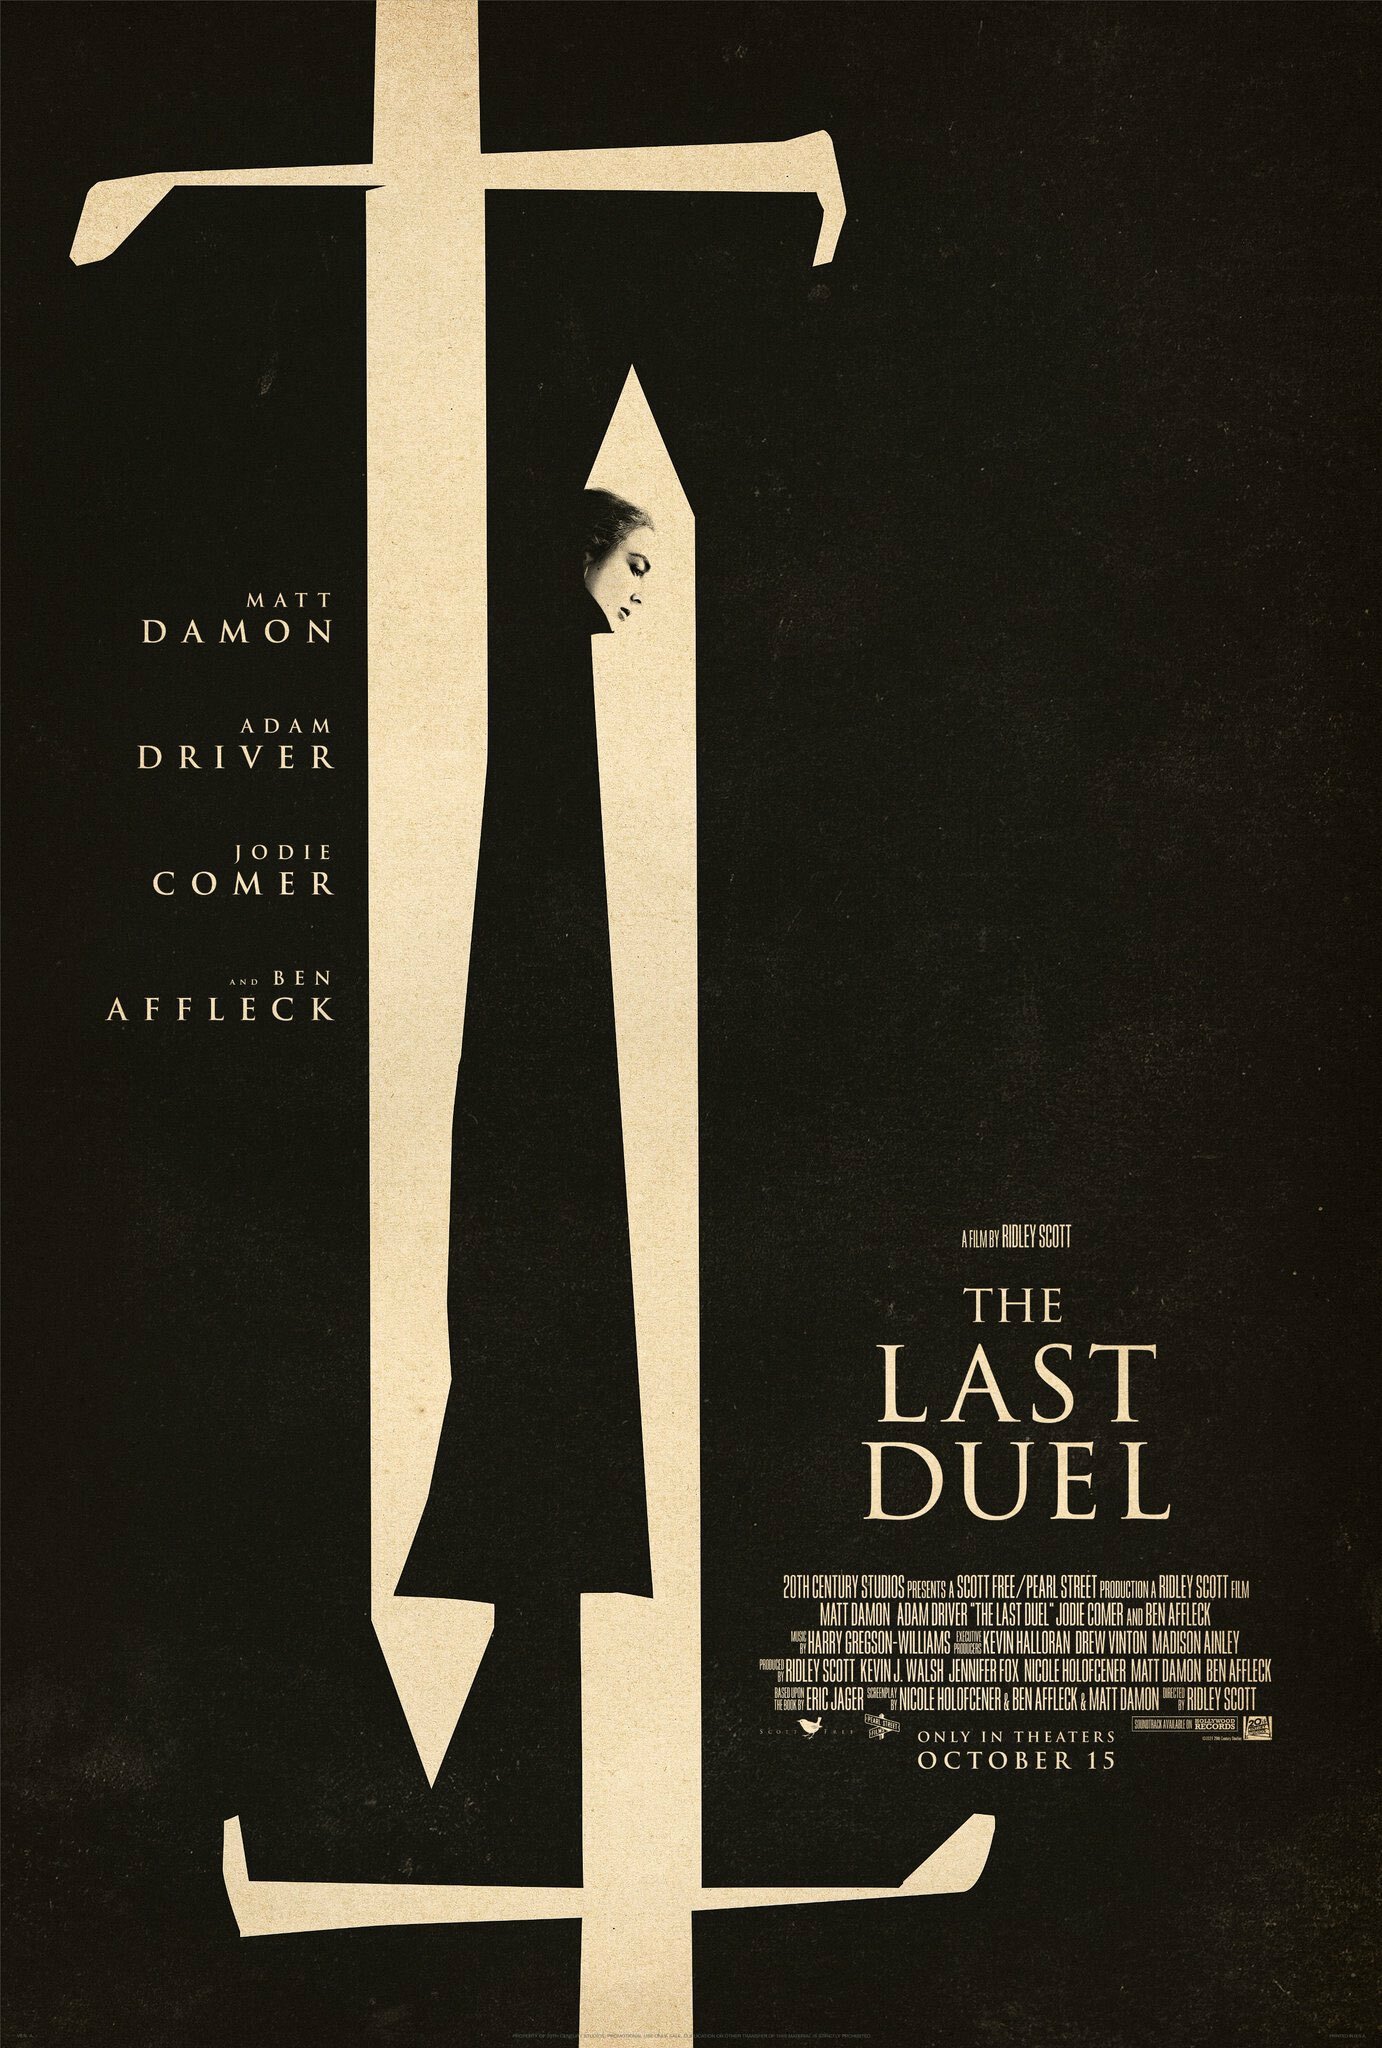 The Last Duel' Trailer is here with Matt Damon, Adam Driver, Jodie Comer  and Ben Affleck